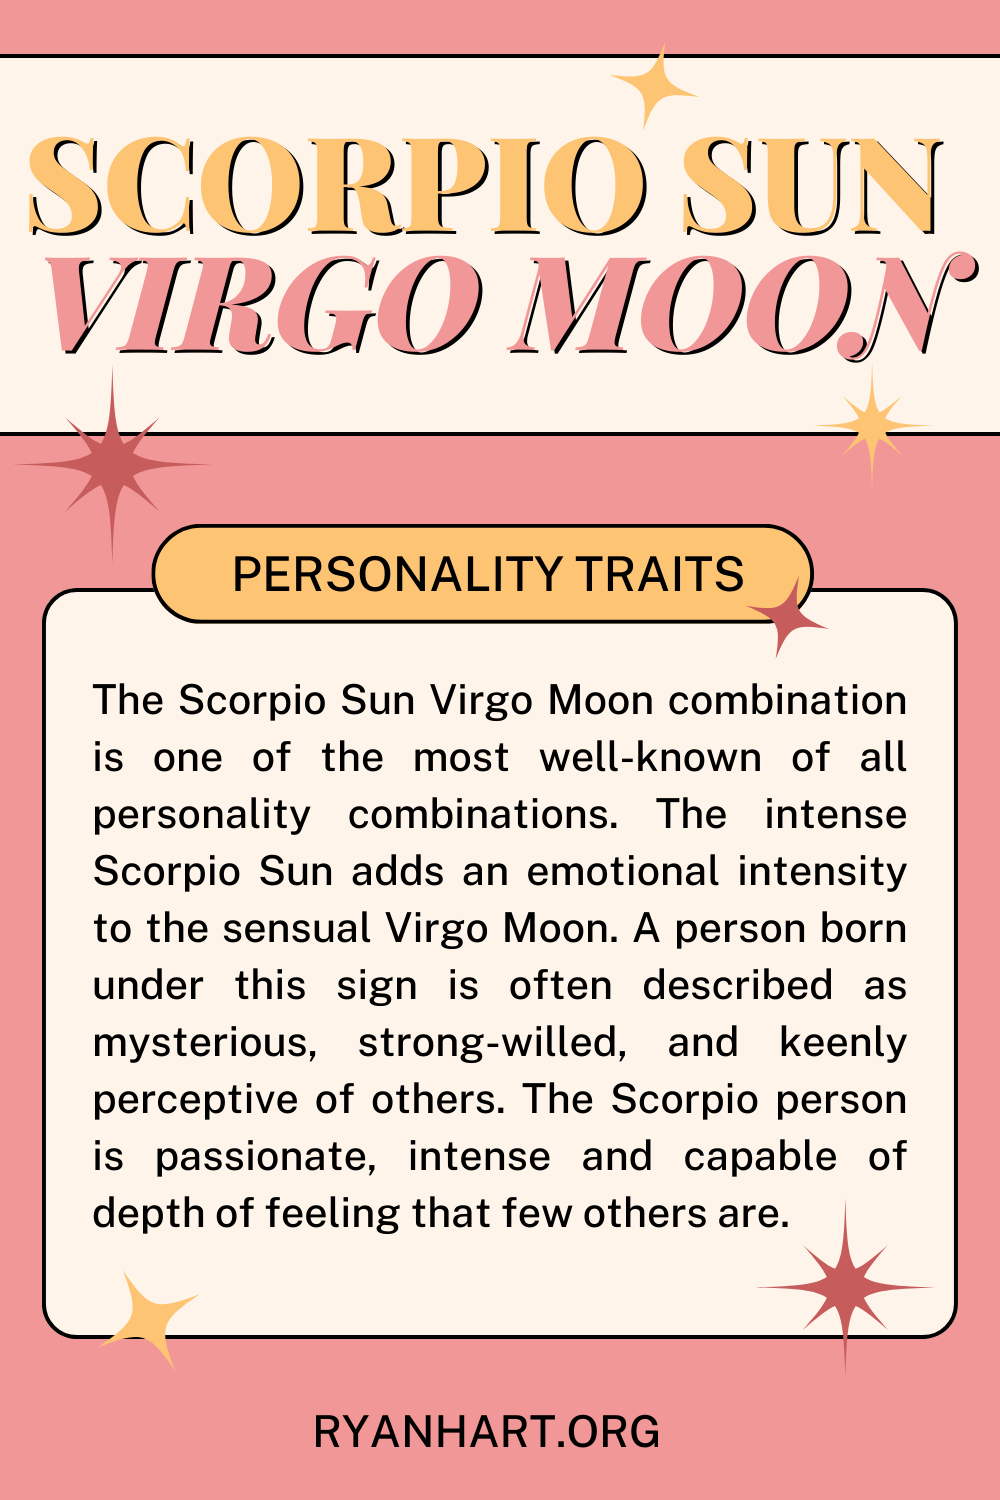 Scorpio Sun Virgo Moon Description